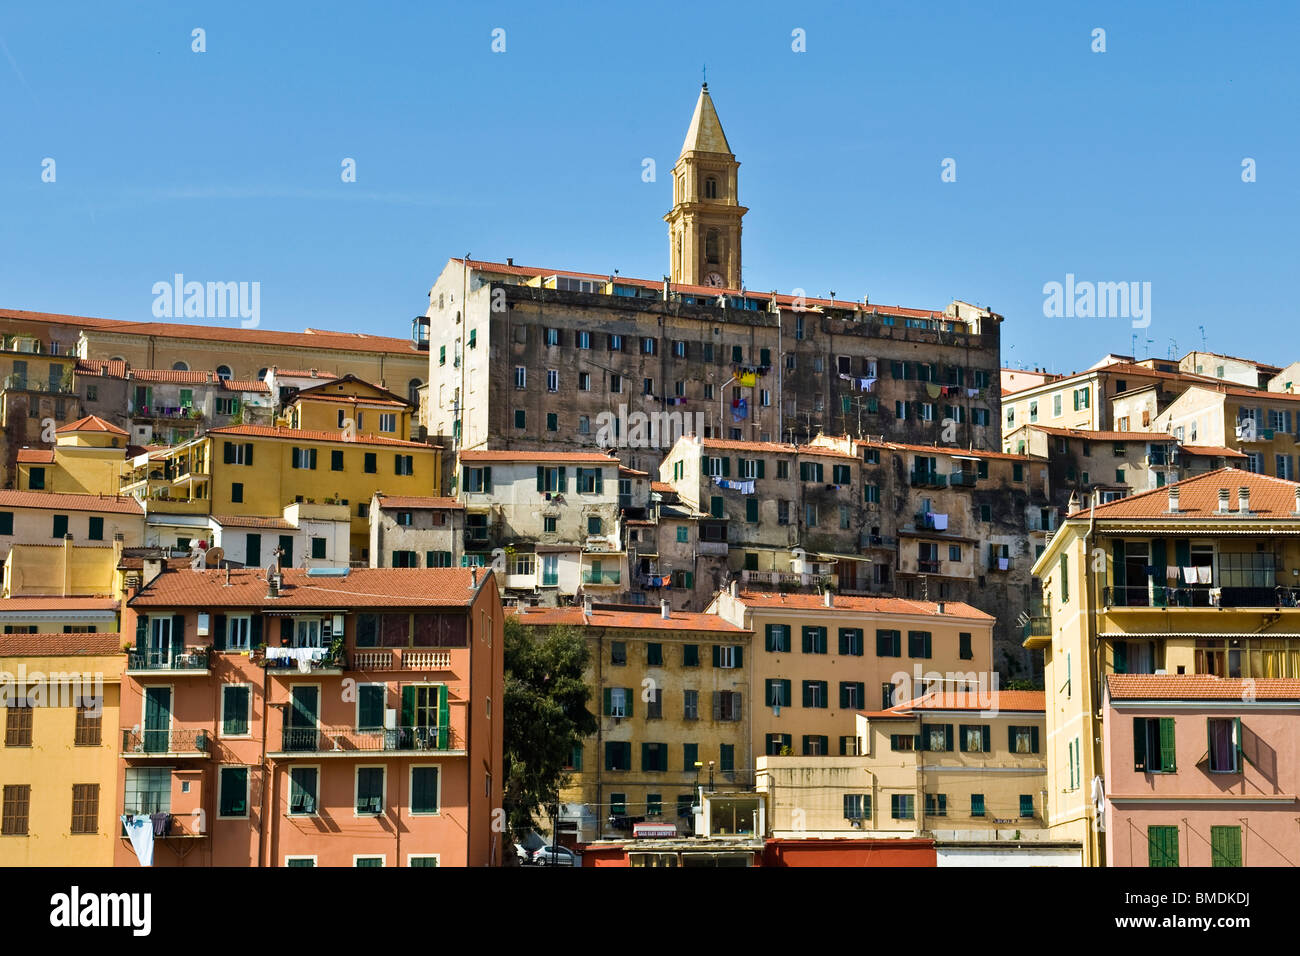 Old city, Ventimiglia, Imperia province, Liguria, Italy Stock Photo